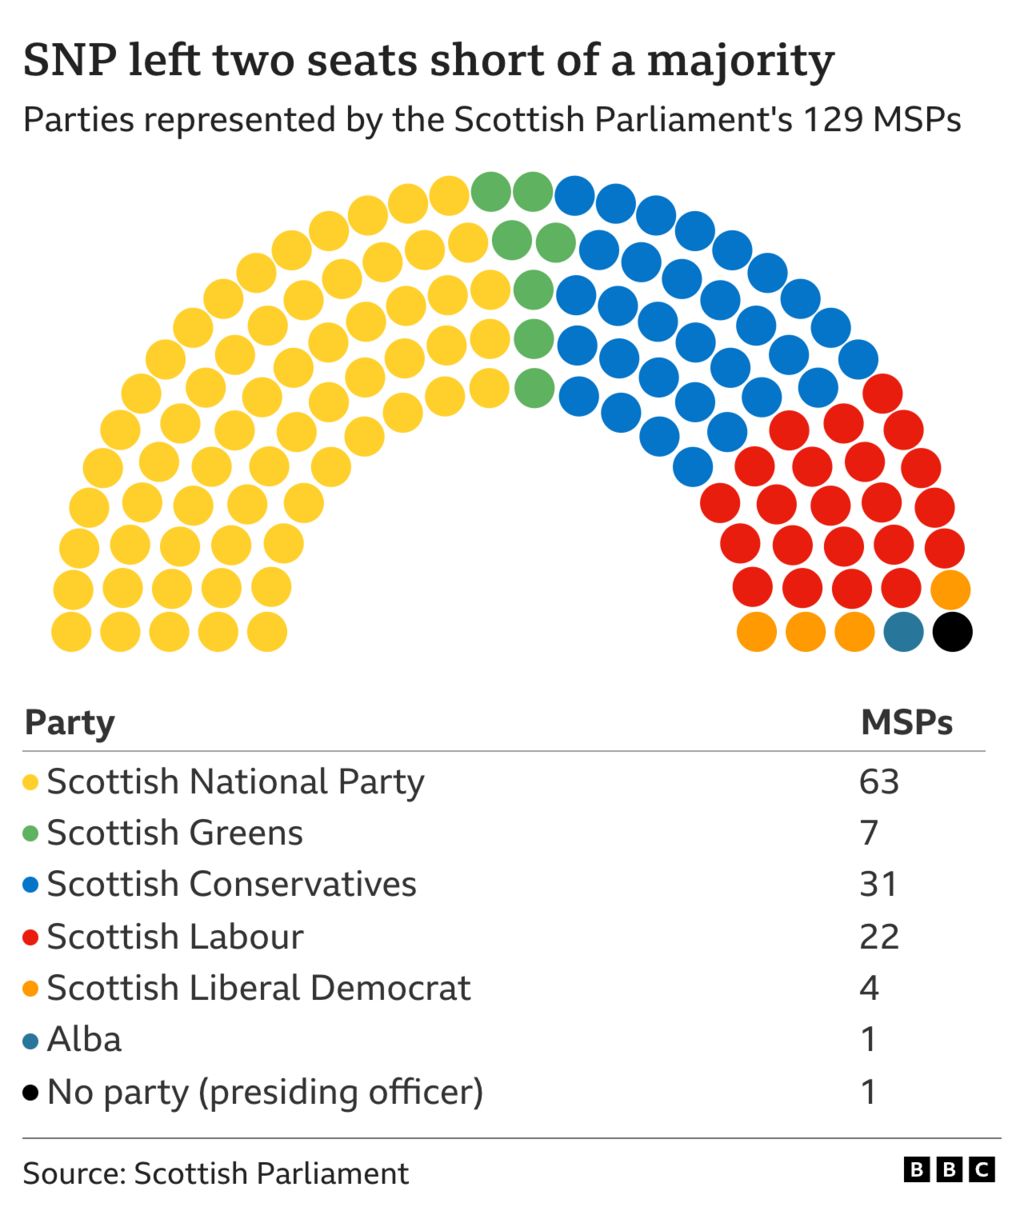 Makeup of Scottish Parliament